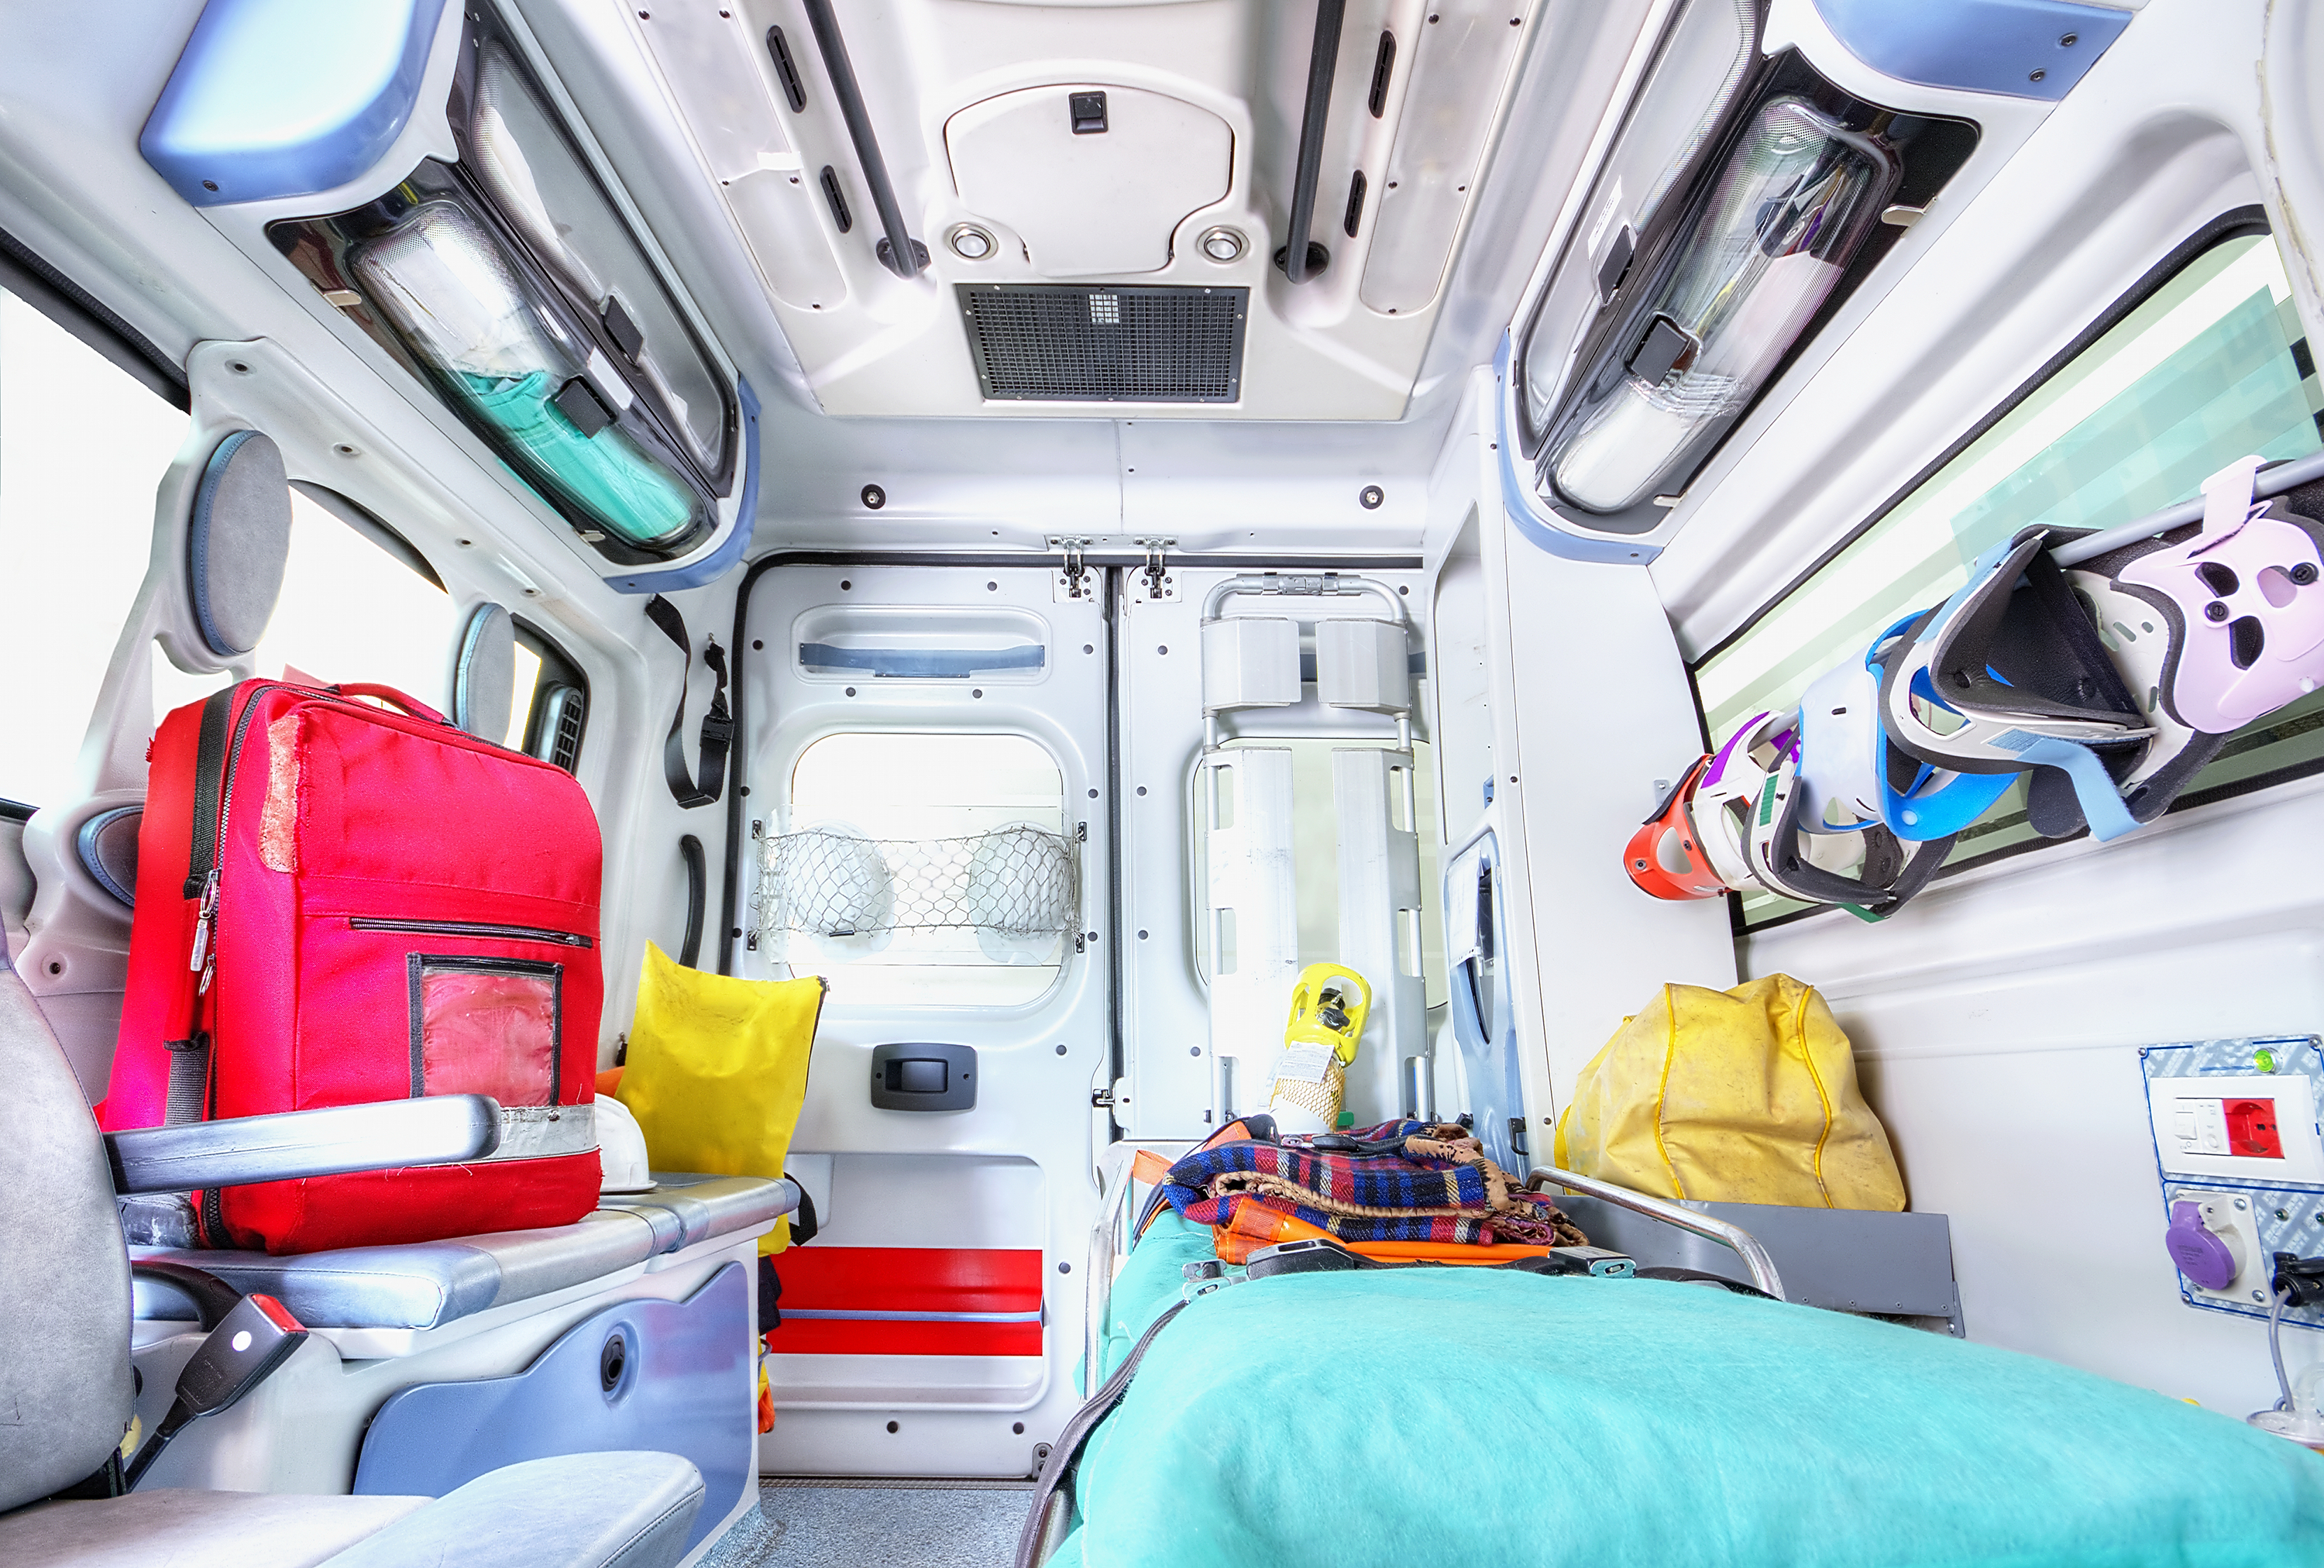 Interior de una ambulancia | Fuente: Shutterstock